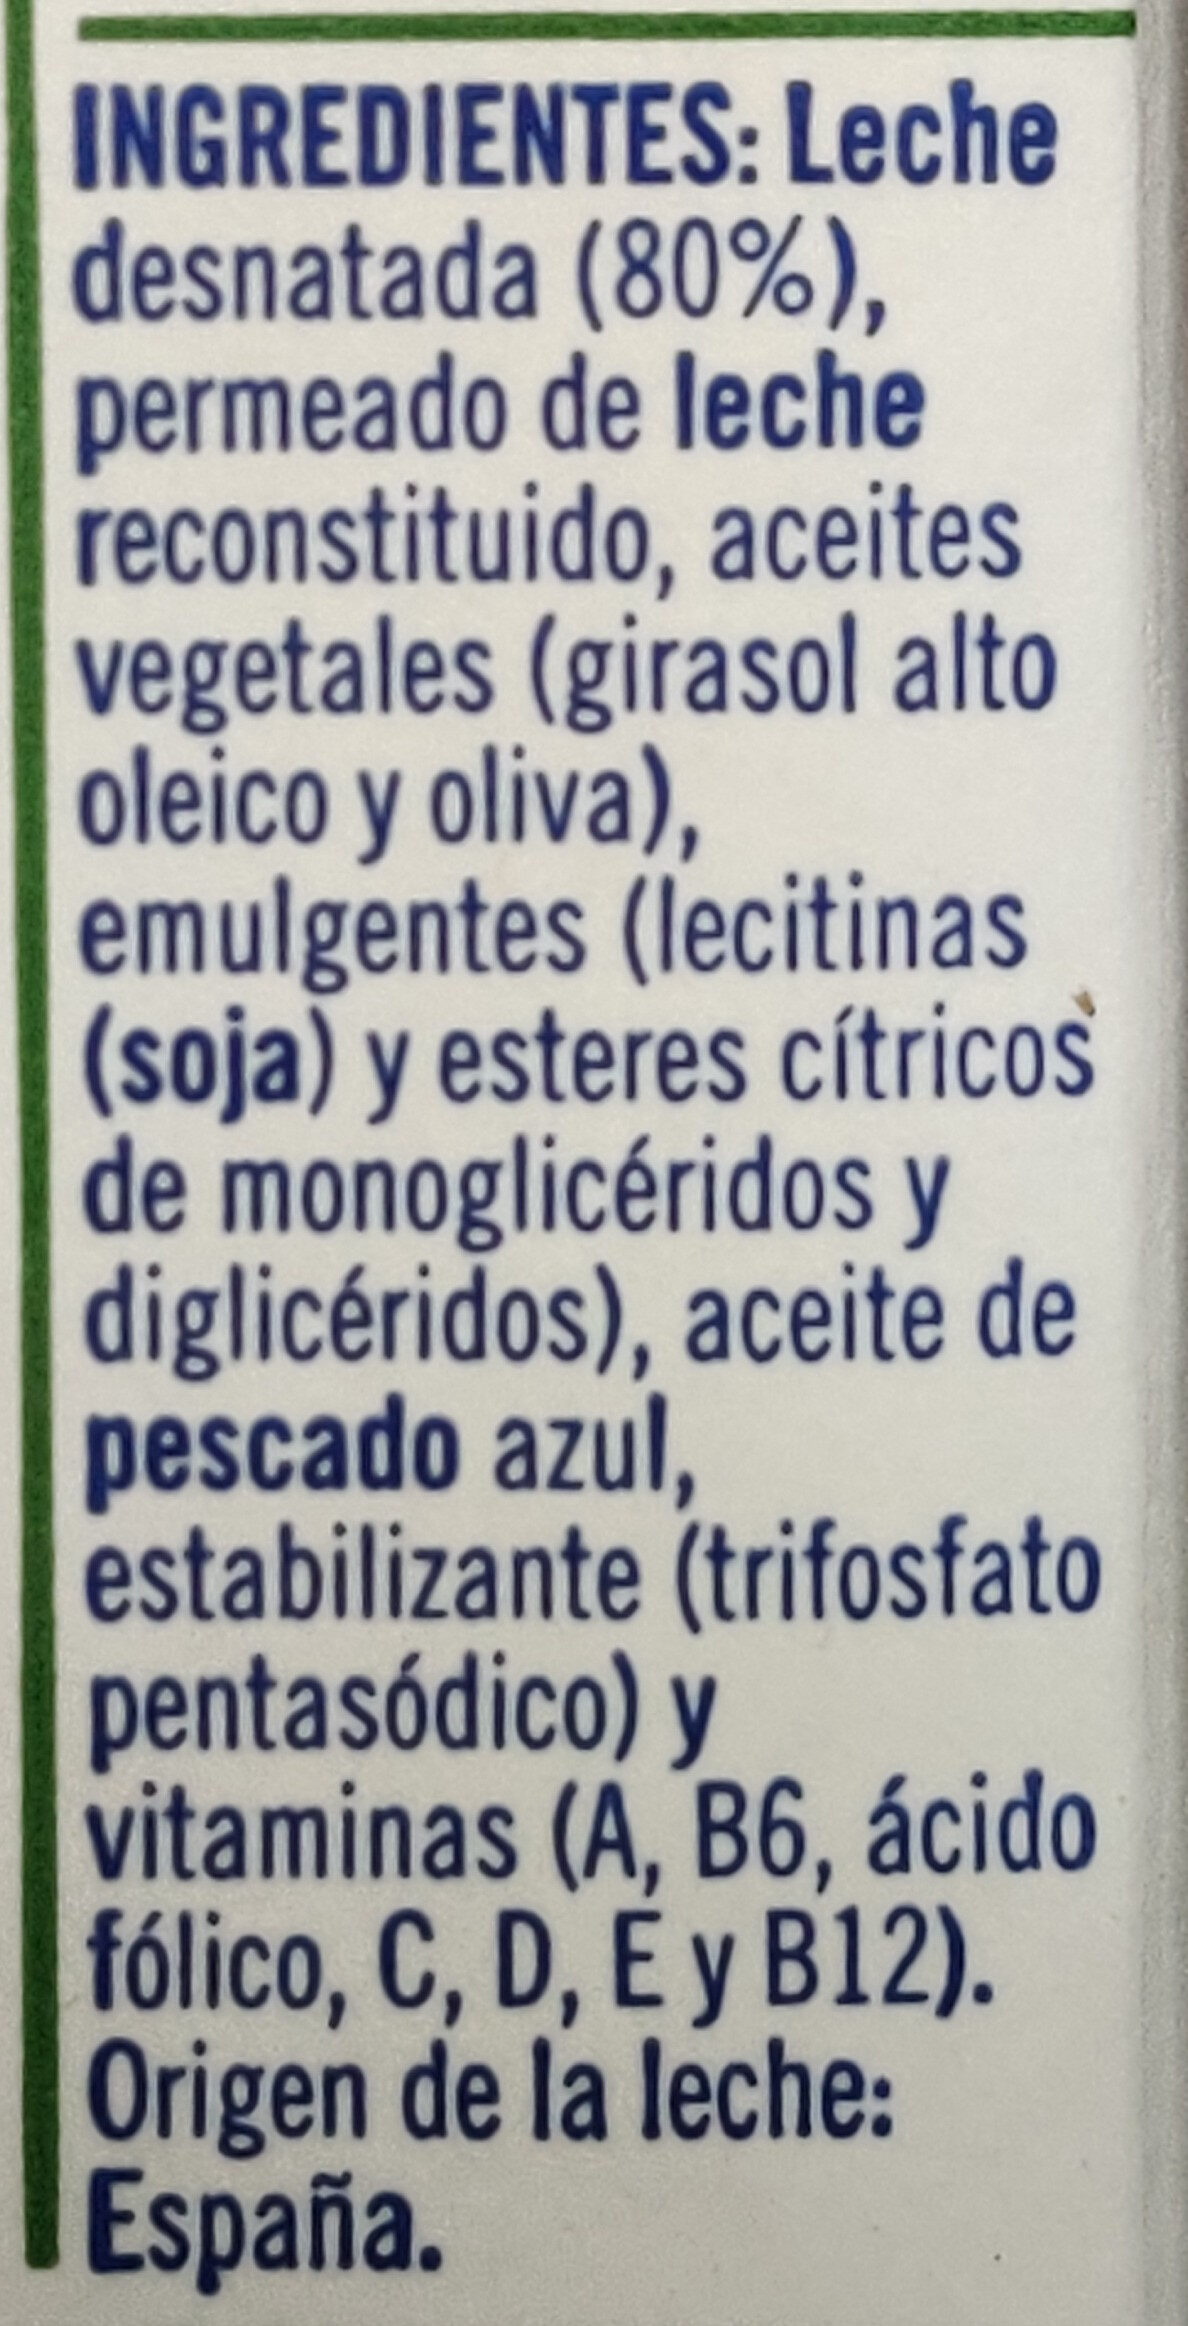 Leche con omega 3 - Ingredientes